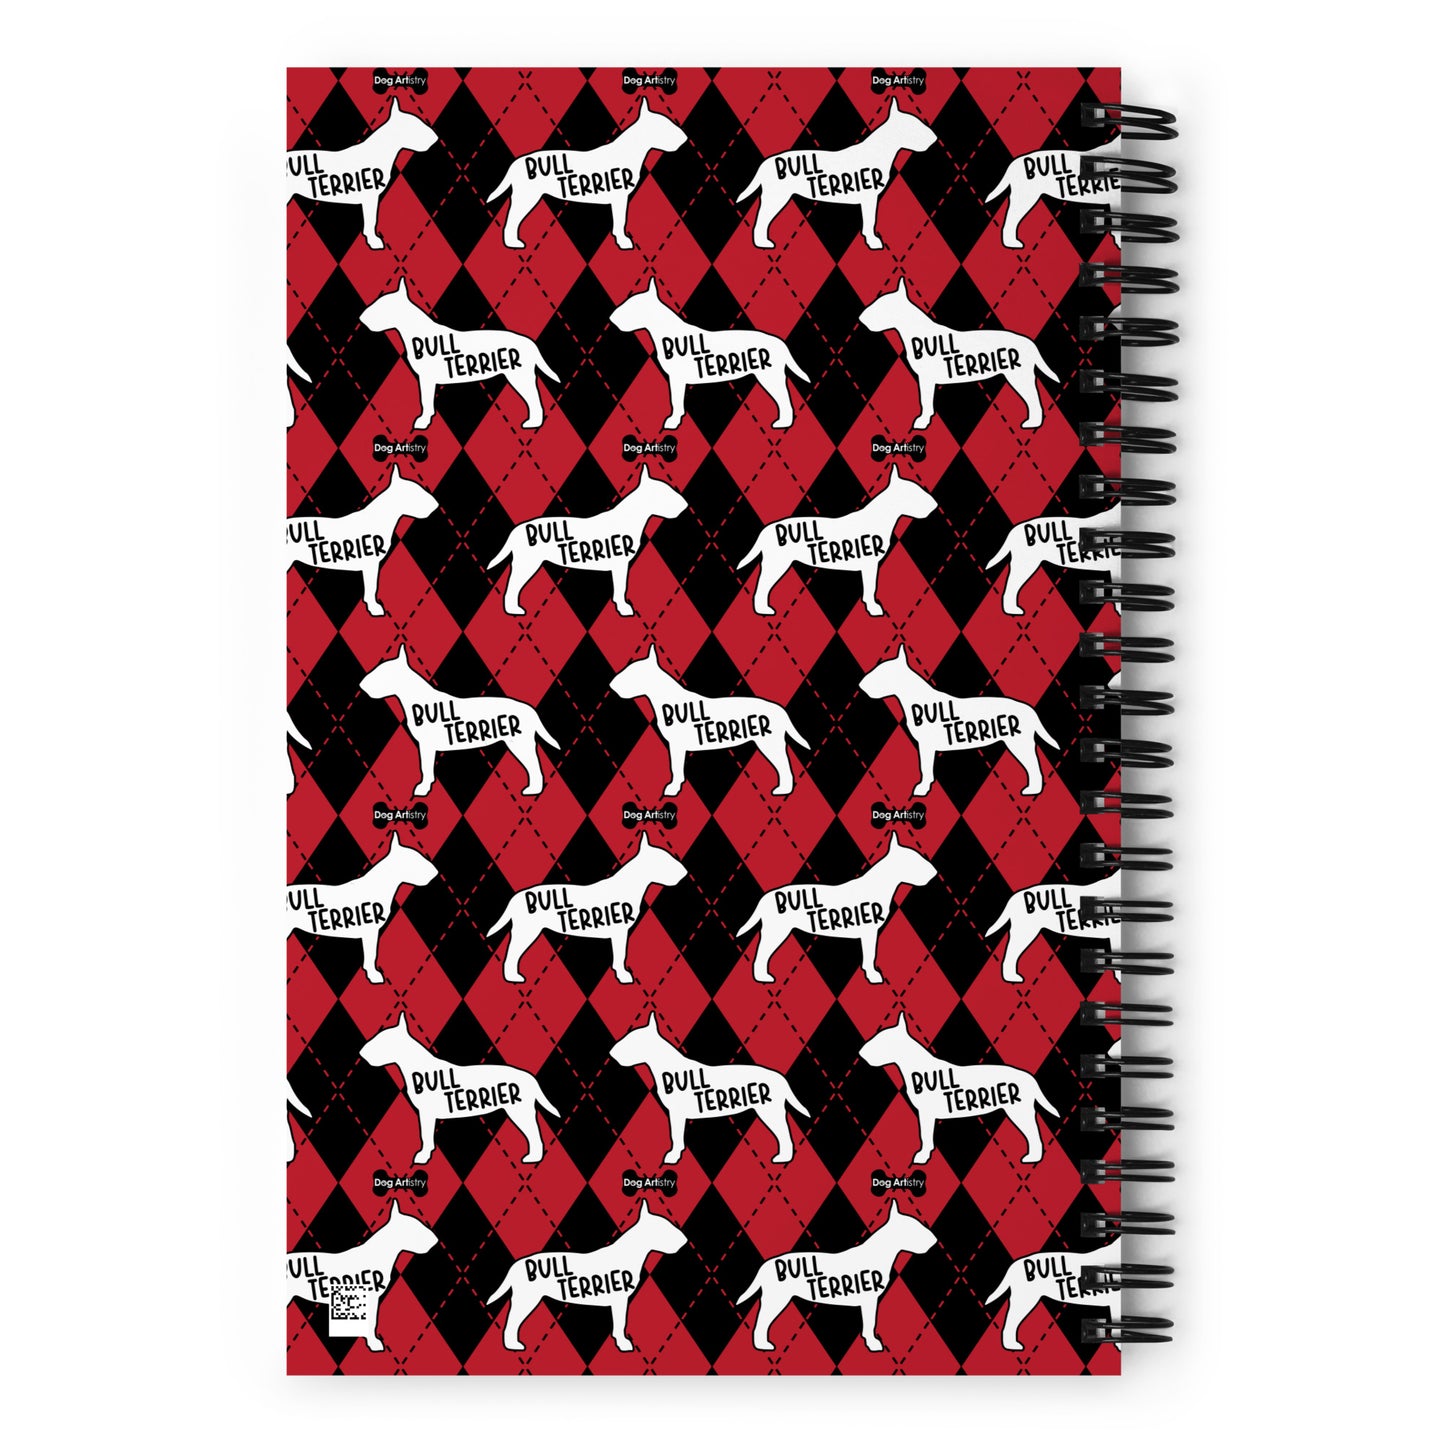 Bull Terrier Argyle Red and Black Spiral Notebooks